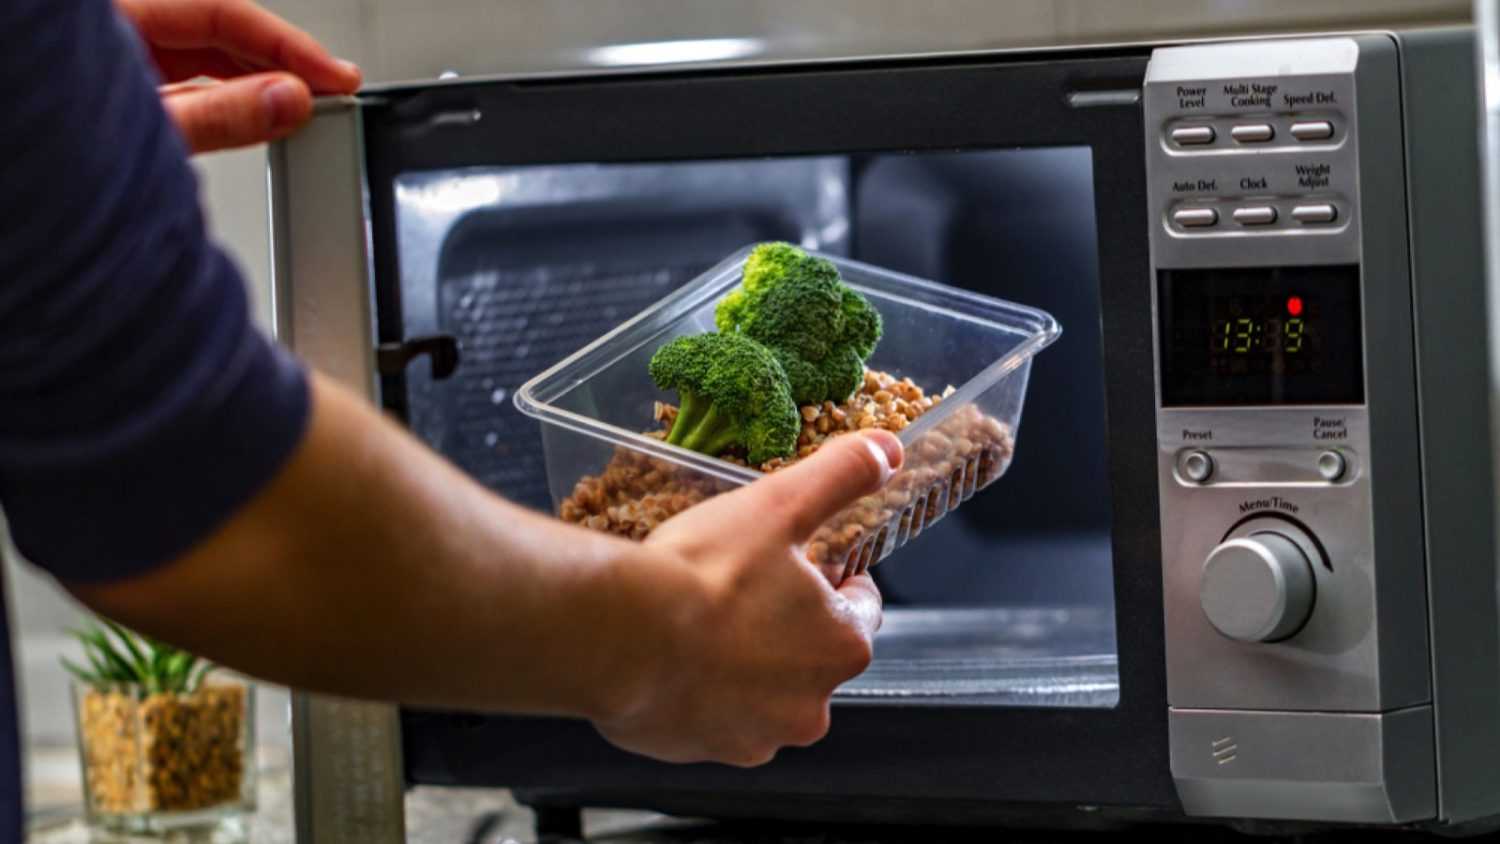 Microwaved Broccoli